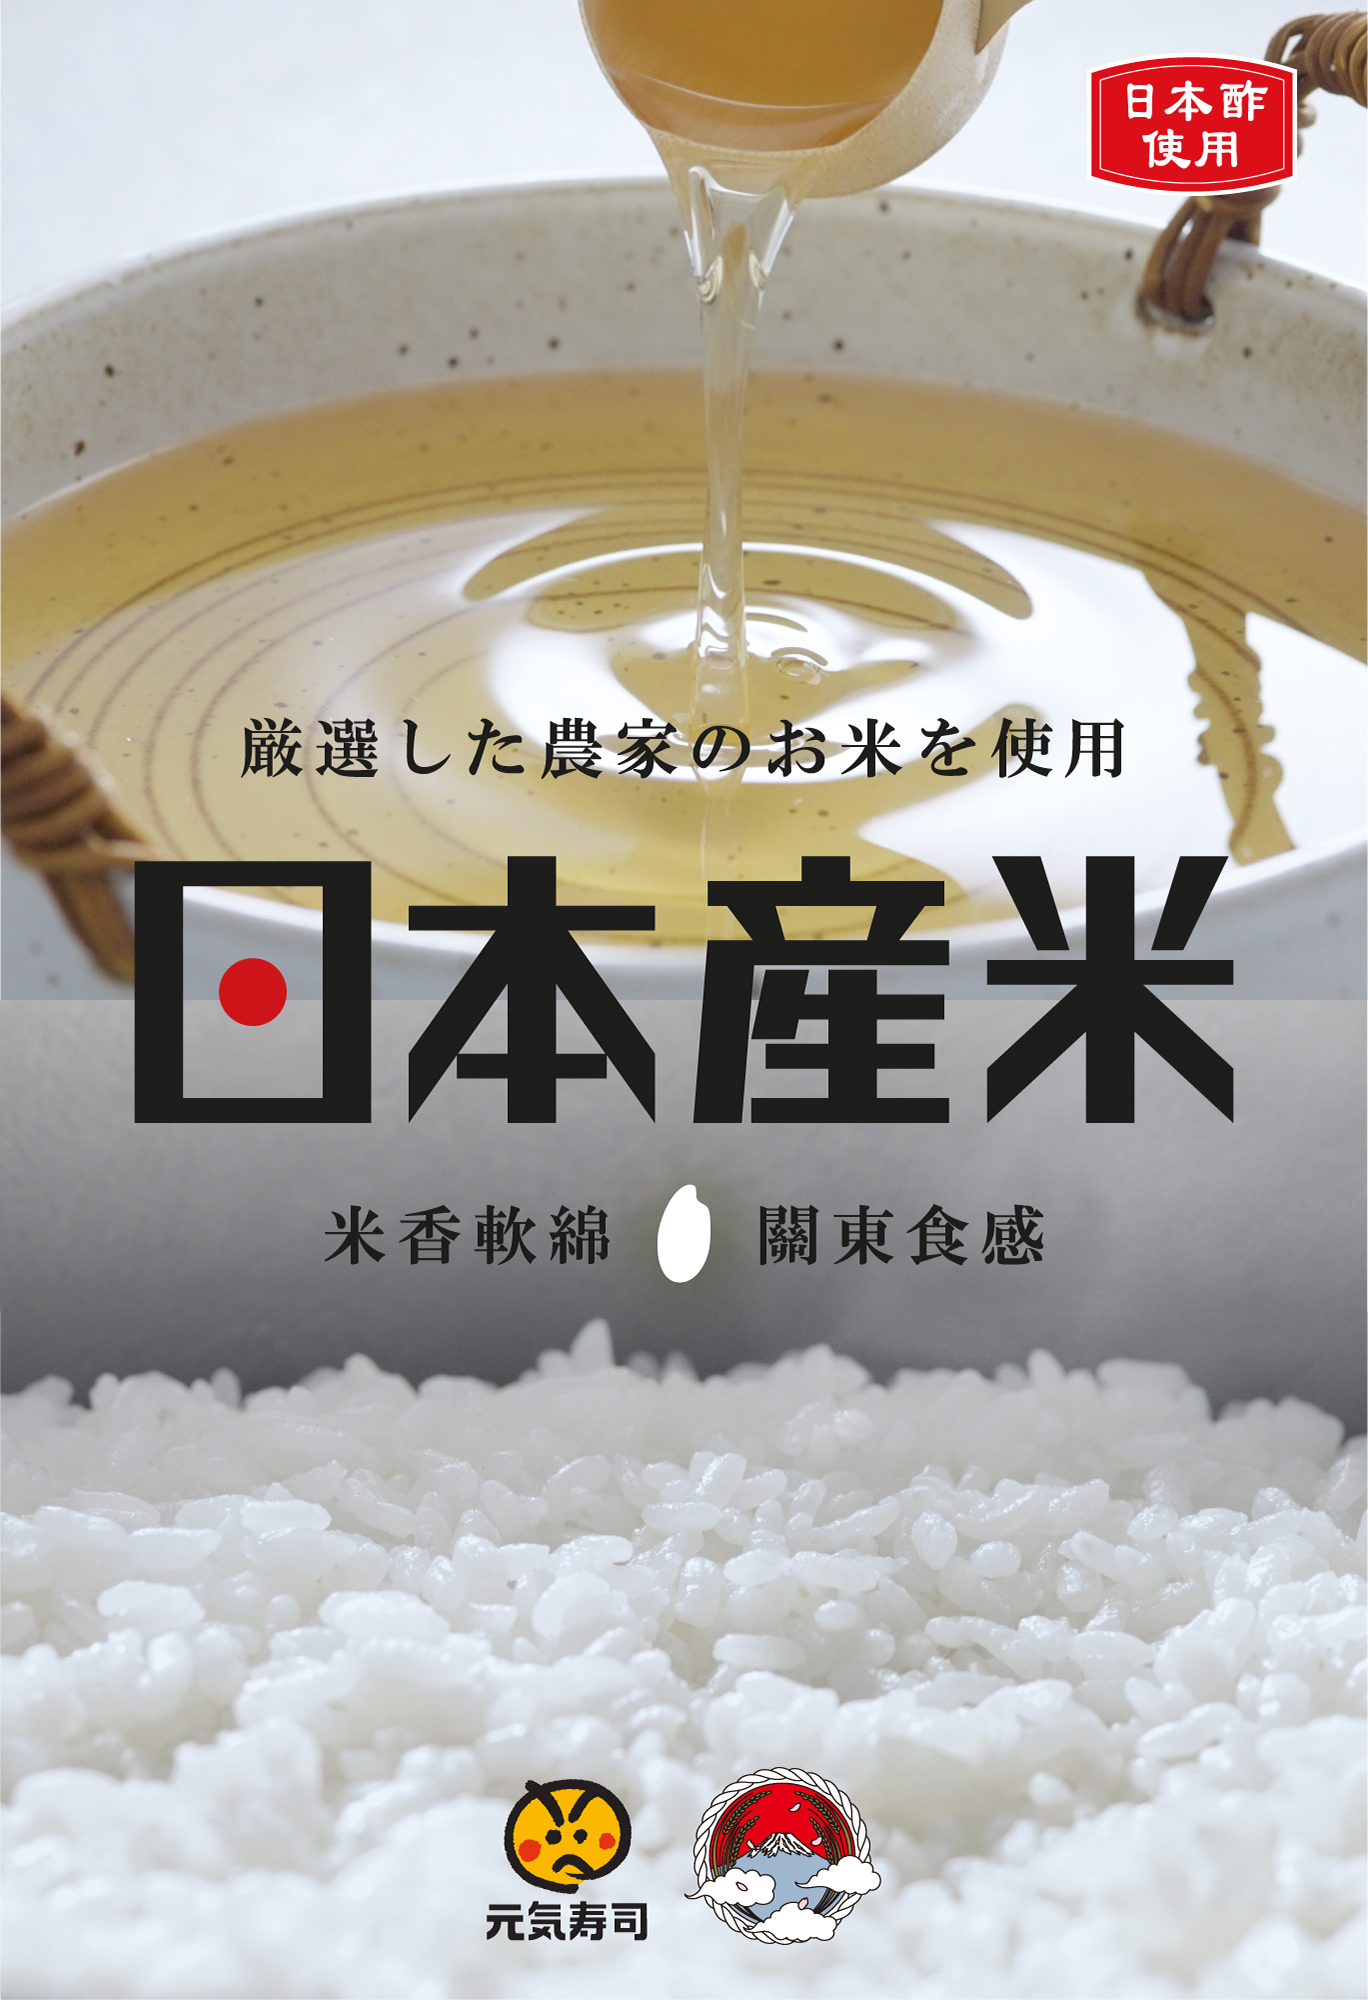 2208_04496_JAP_GEKHD_genki_rice_campaign_GDN_v2_news_updates_details_1368x2000.jpg